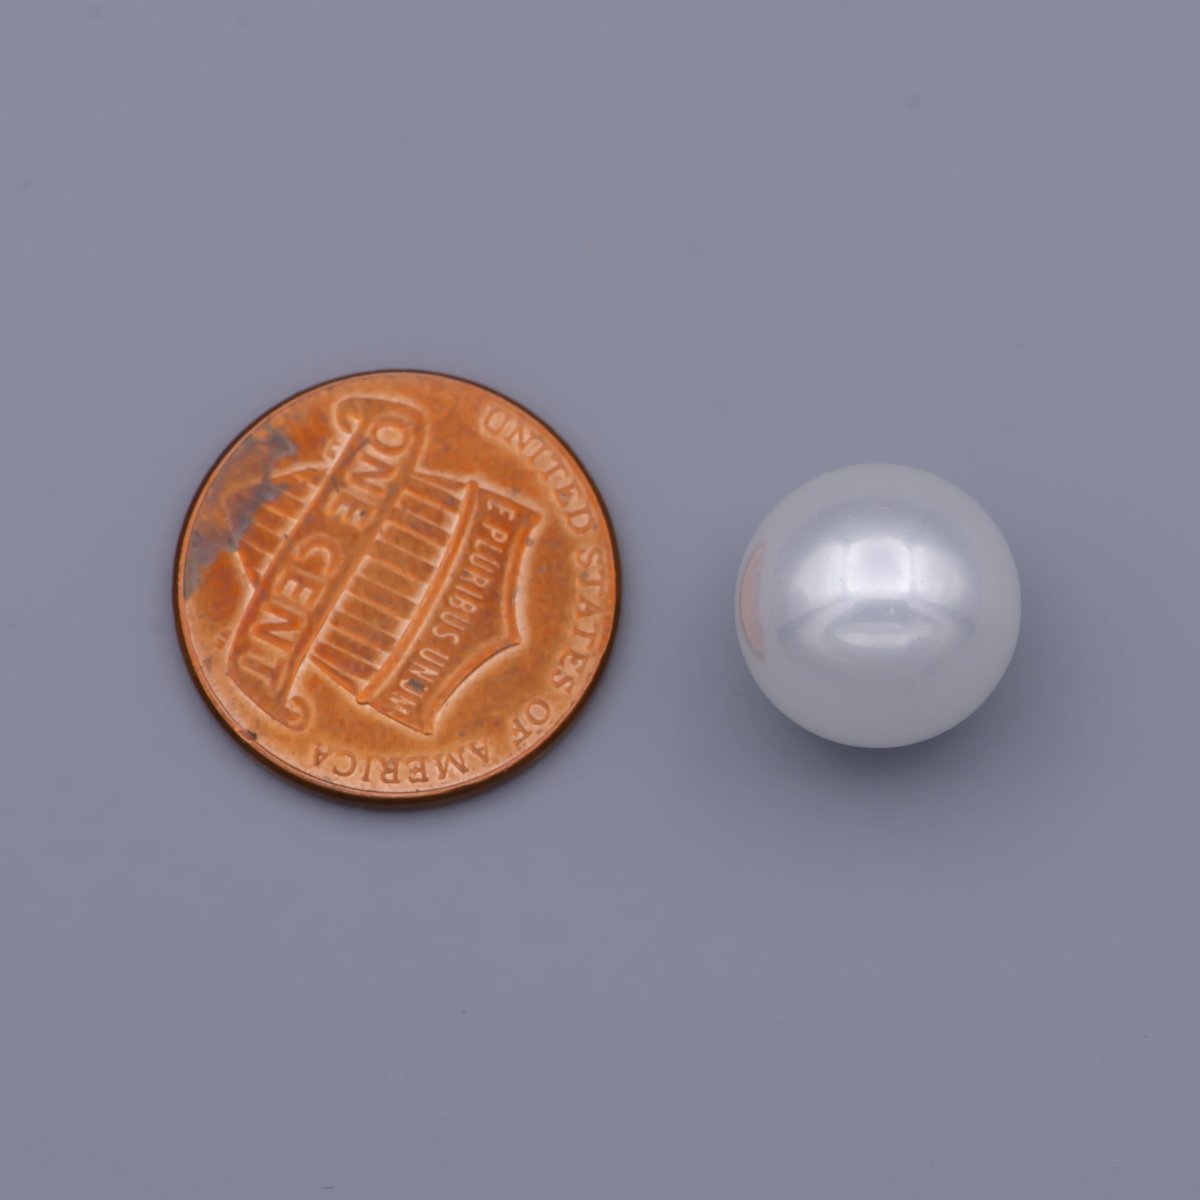 12mm White Acrylic Pearl Round Beads | P-1831 - DLUXCA